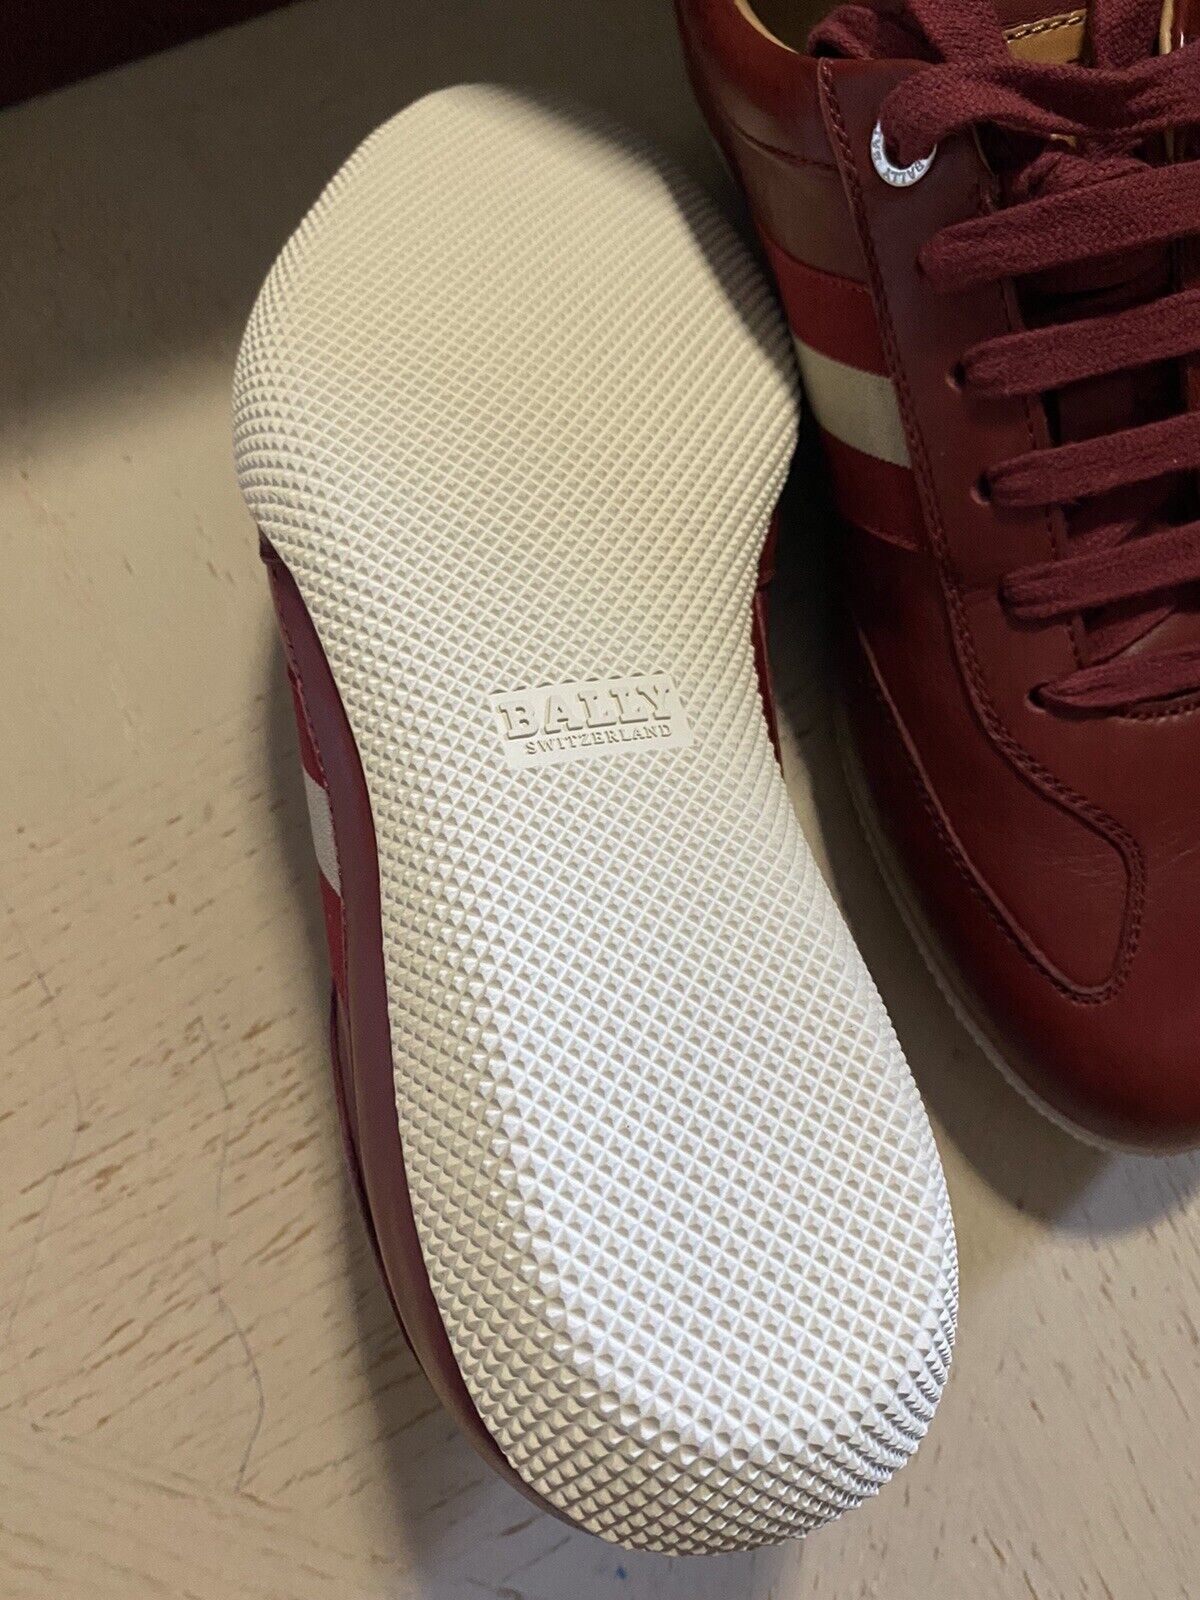 New $550 Bally Men Zibler Leather Sneakers Shoes Red 7 US Switzerland